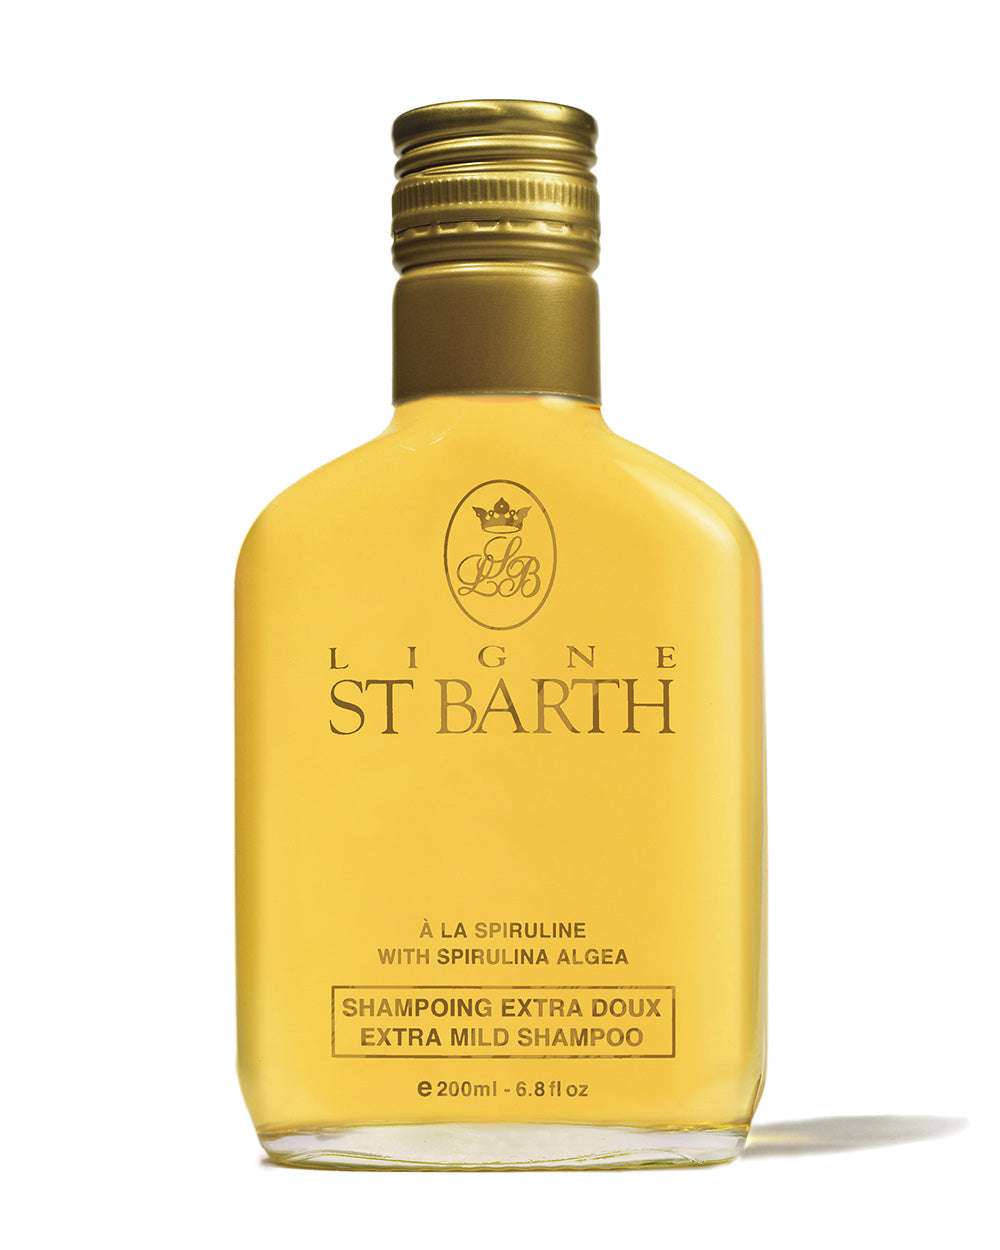 Ligne St Barth – Shampoo dolce alla Spirulina - Danae Profumeria